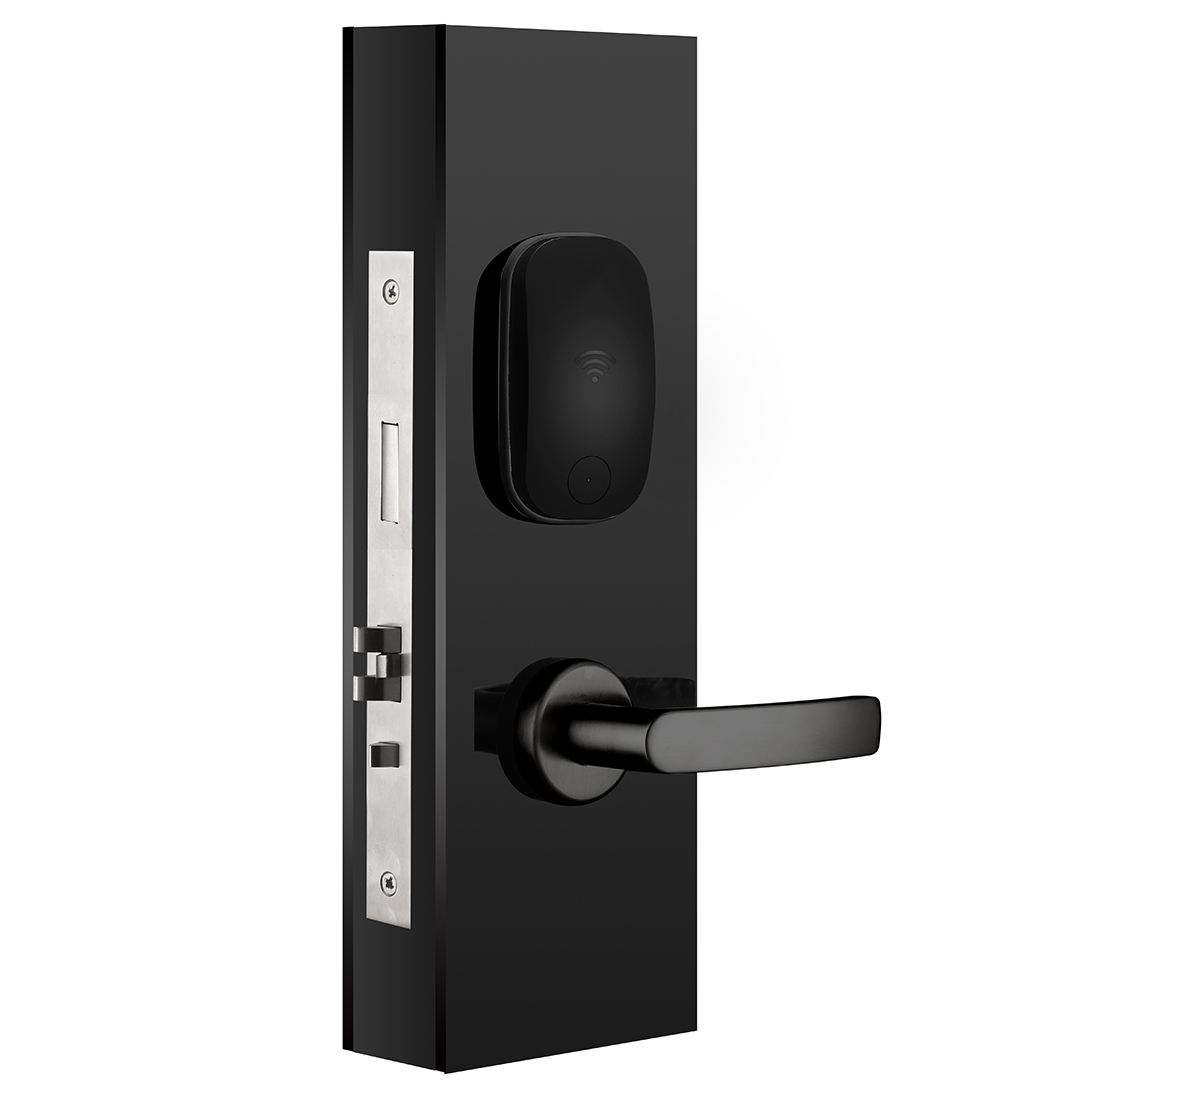 Matte black RFID door lock with black handle

